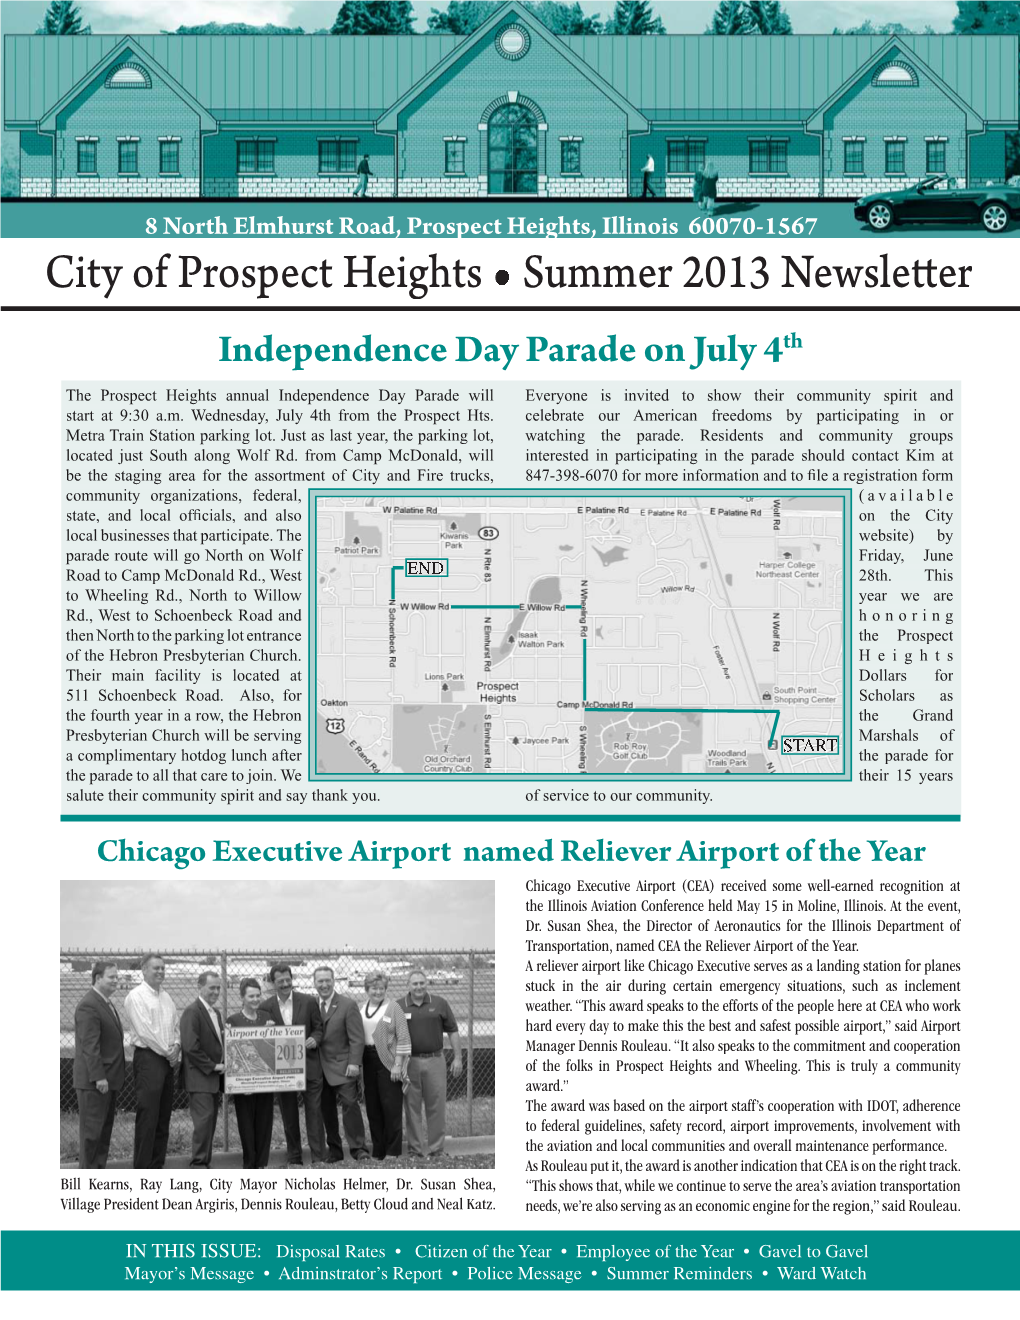 City of Prospect Heights • Summer 2013 Newslett • Ertt